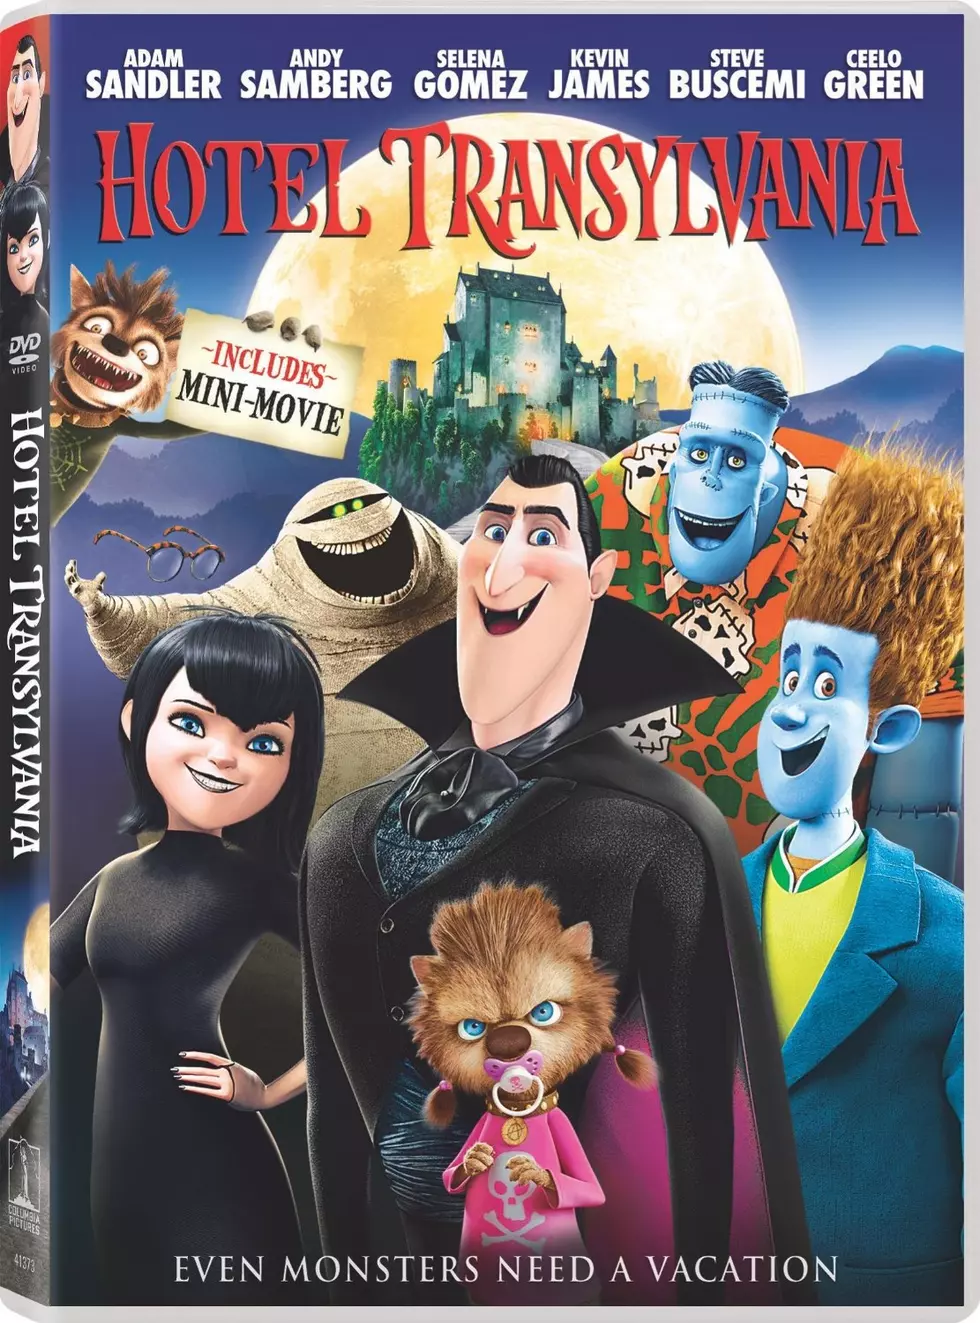 The Last FREE Friday Night Downtown Movie Of The Season Is “Hotel Transylvania”